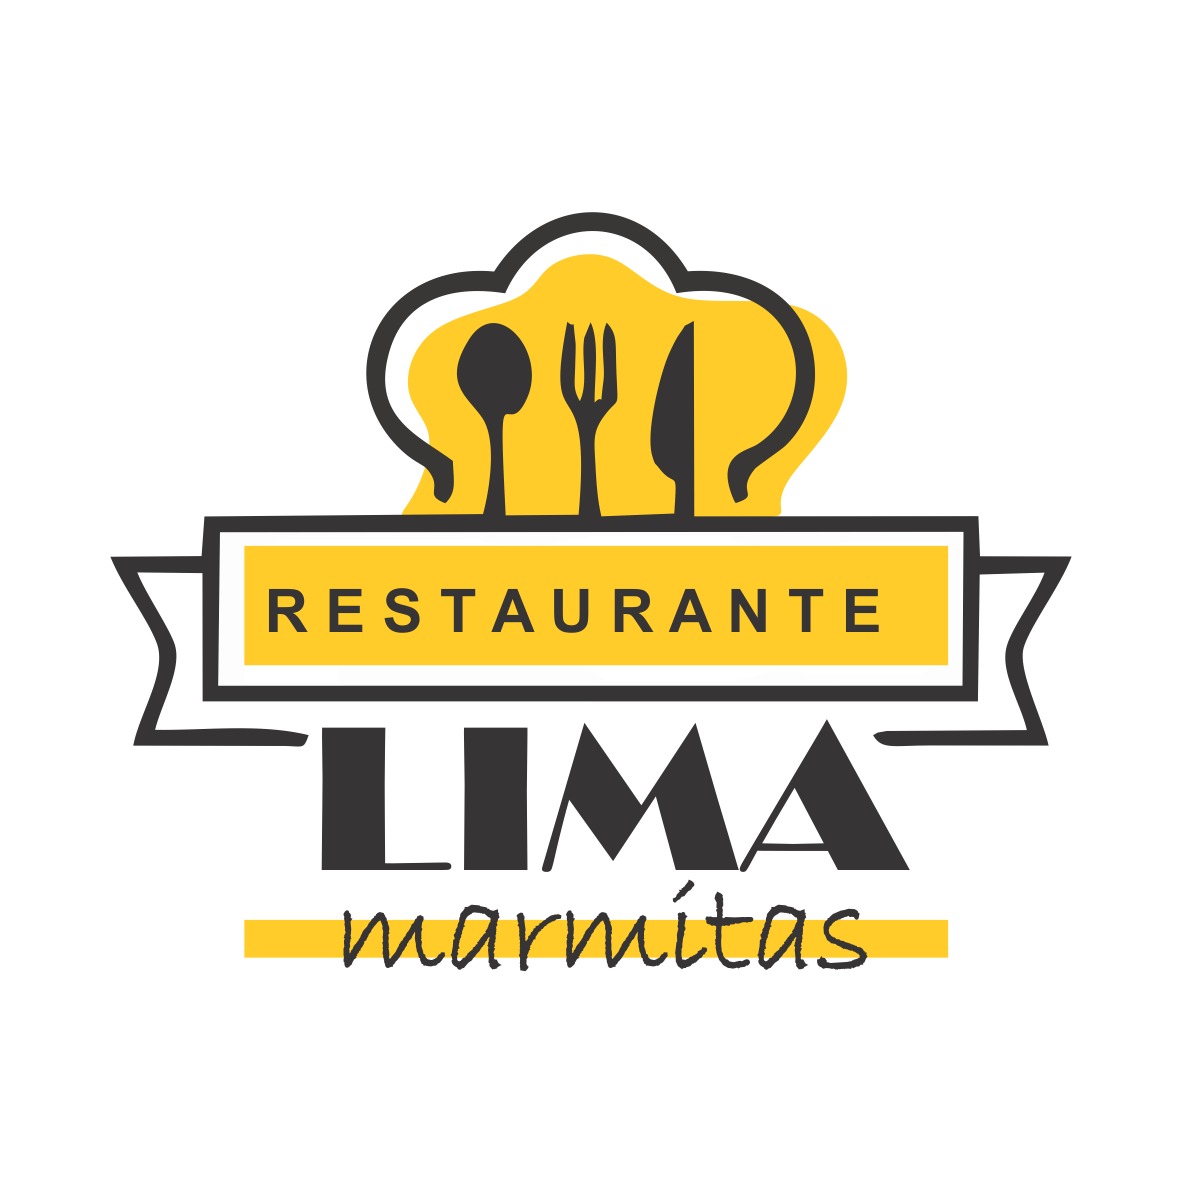 
Logotipo Logomarca para Marmitas Restaurante



